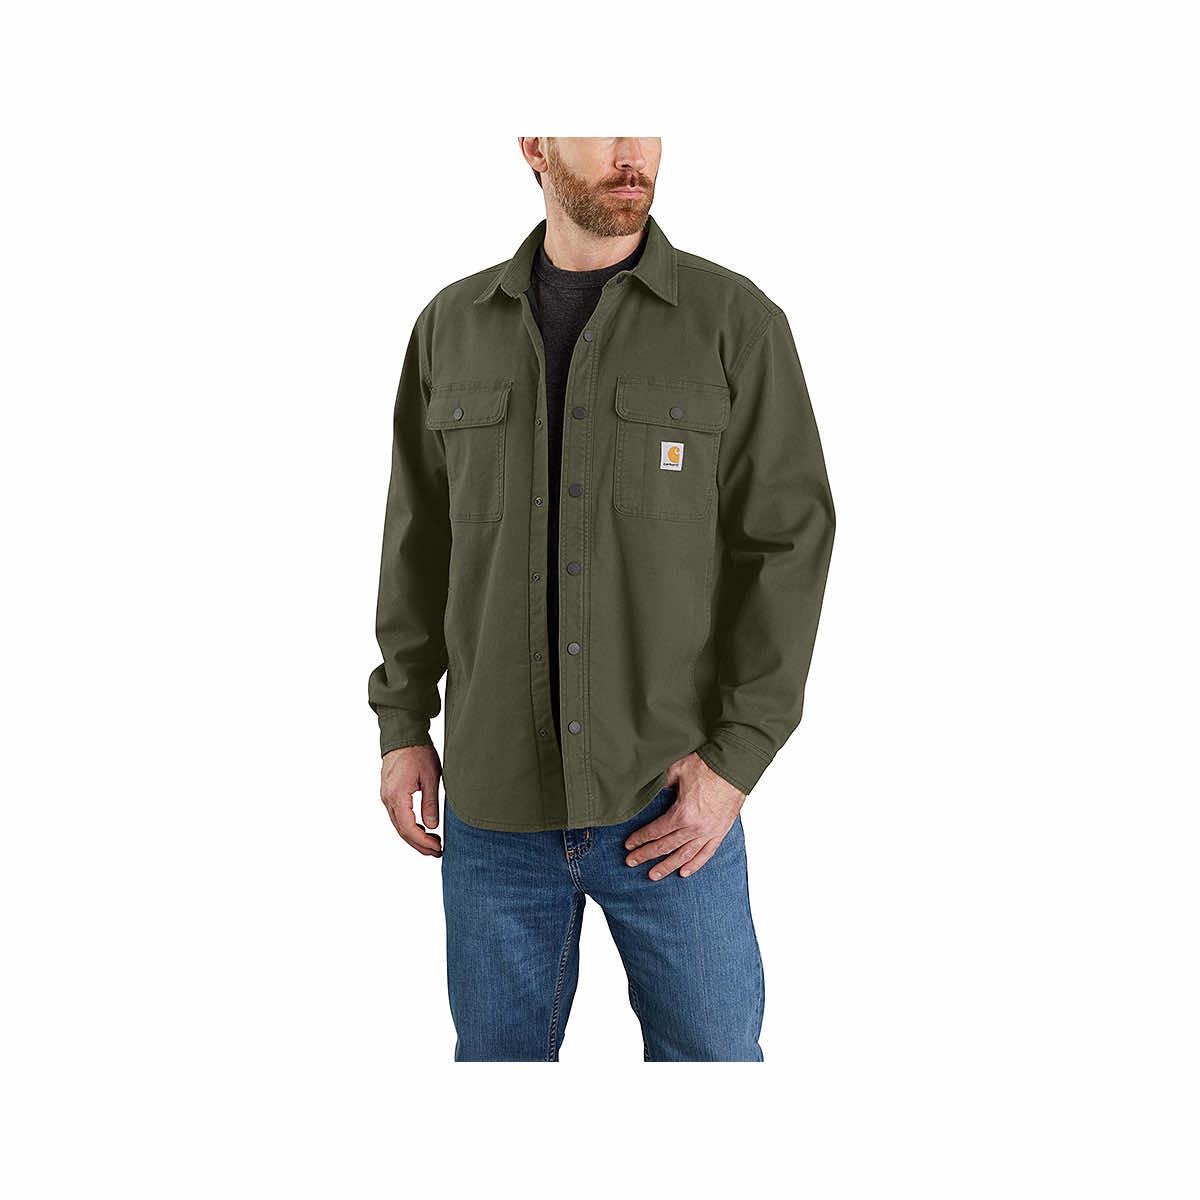  Men's Rugged Flex Relaxed Fit Canvas Fleece- Lined Shirt Jacket